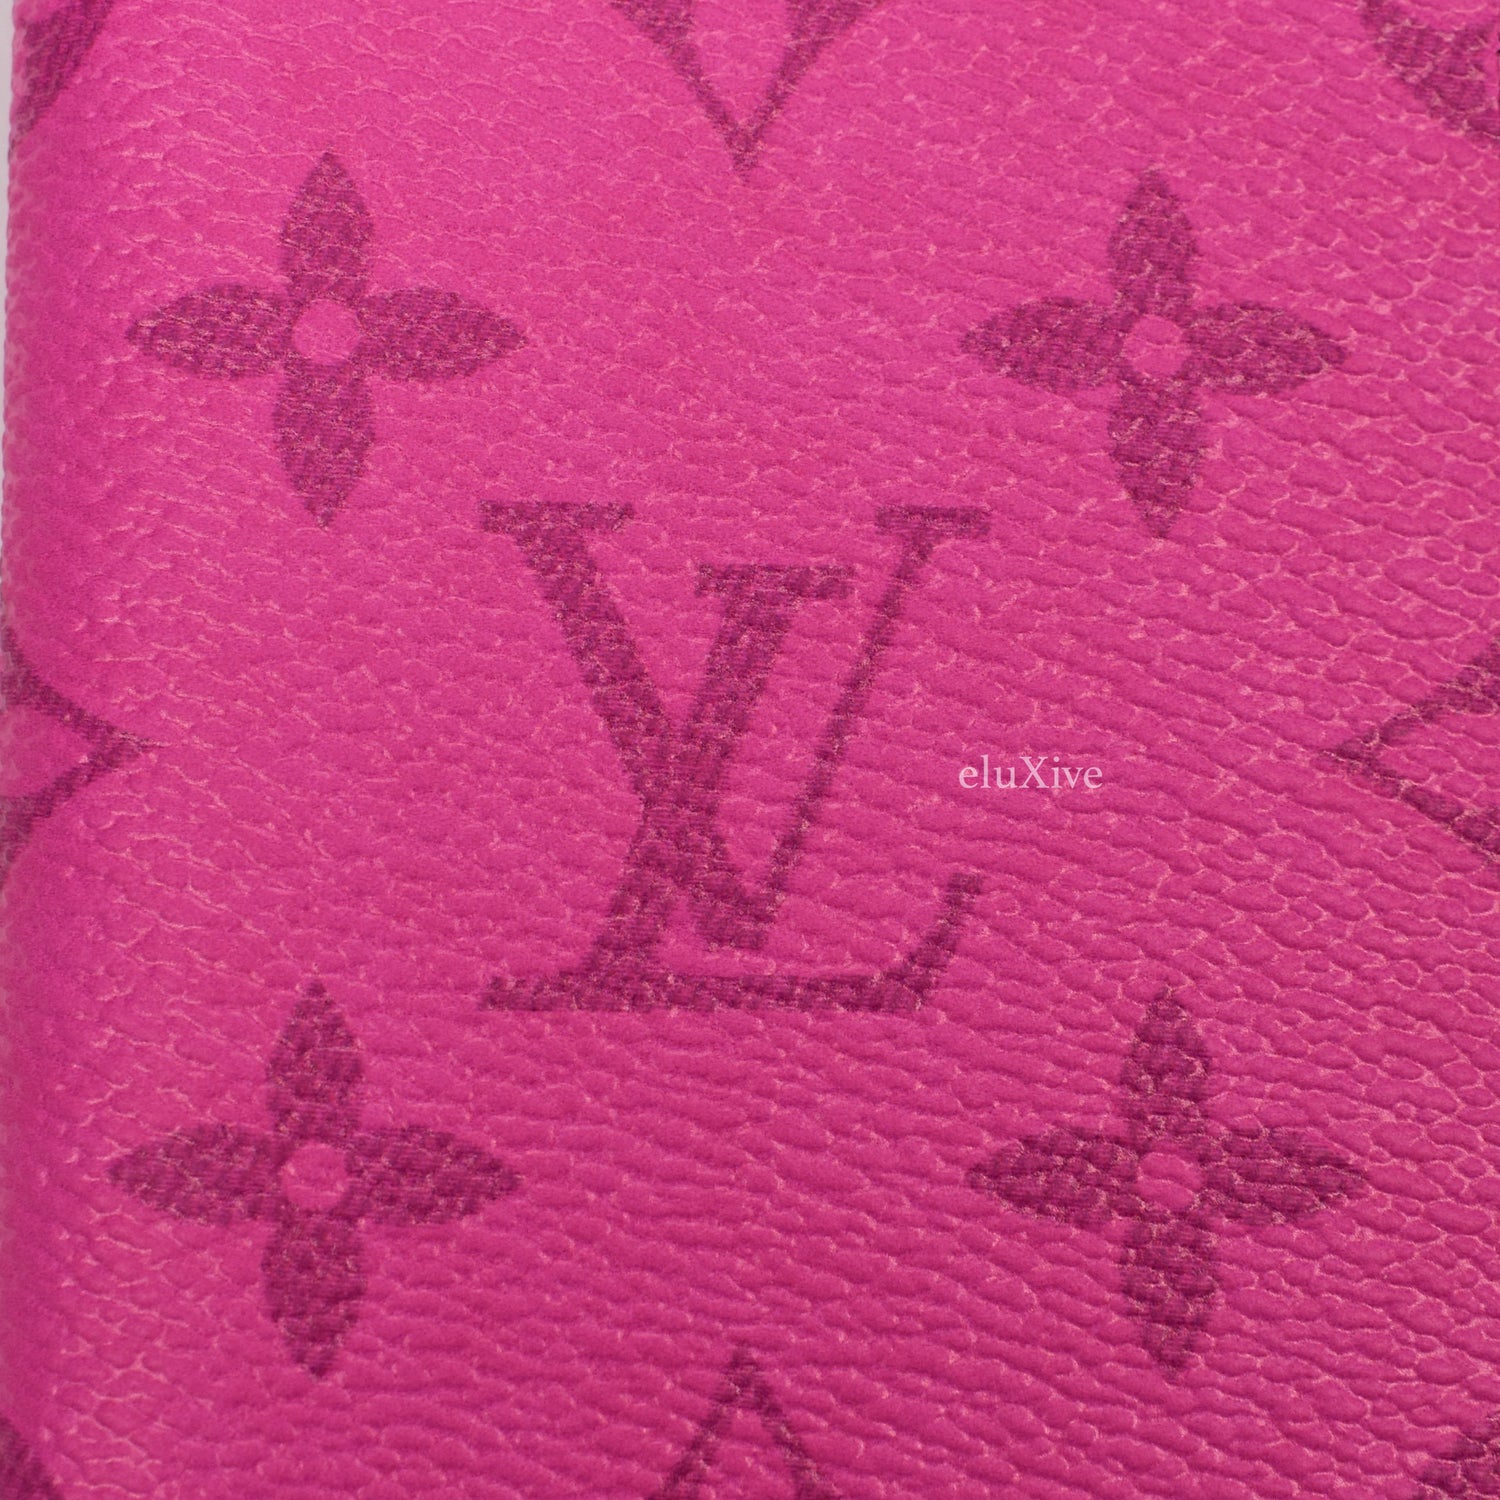 Louis Vuitton Taurillon Monogram Logo Pink Blue Ombre Pocket Organizer  Wallet